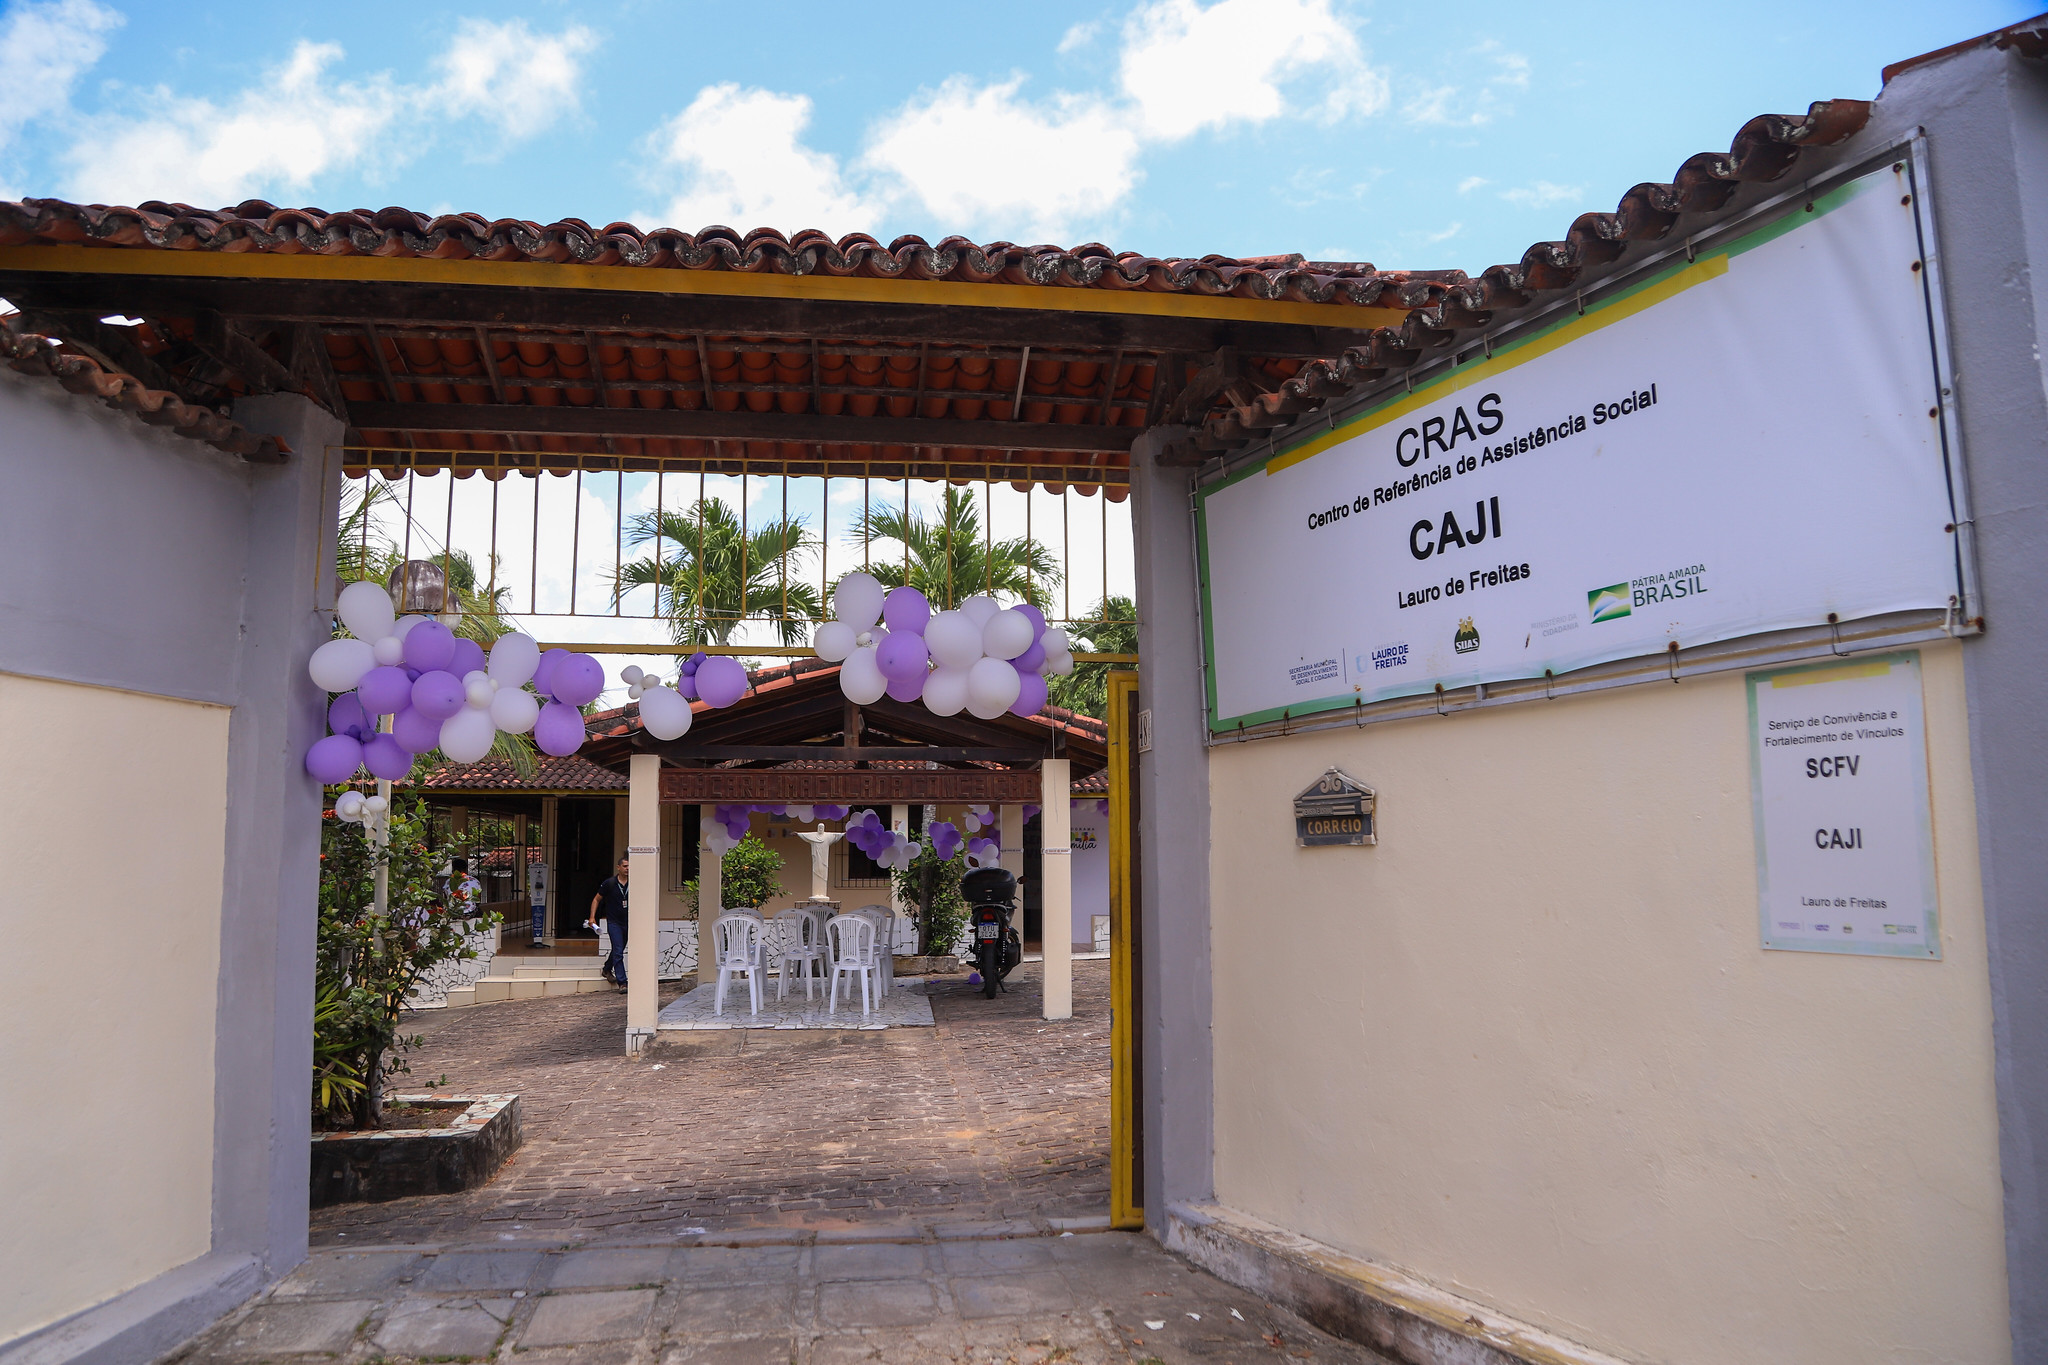 Prefeitura entrega reforma do CRAS Caji para fortalecer assist�ncia social no munic�pio 